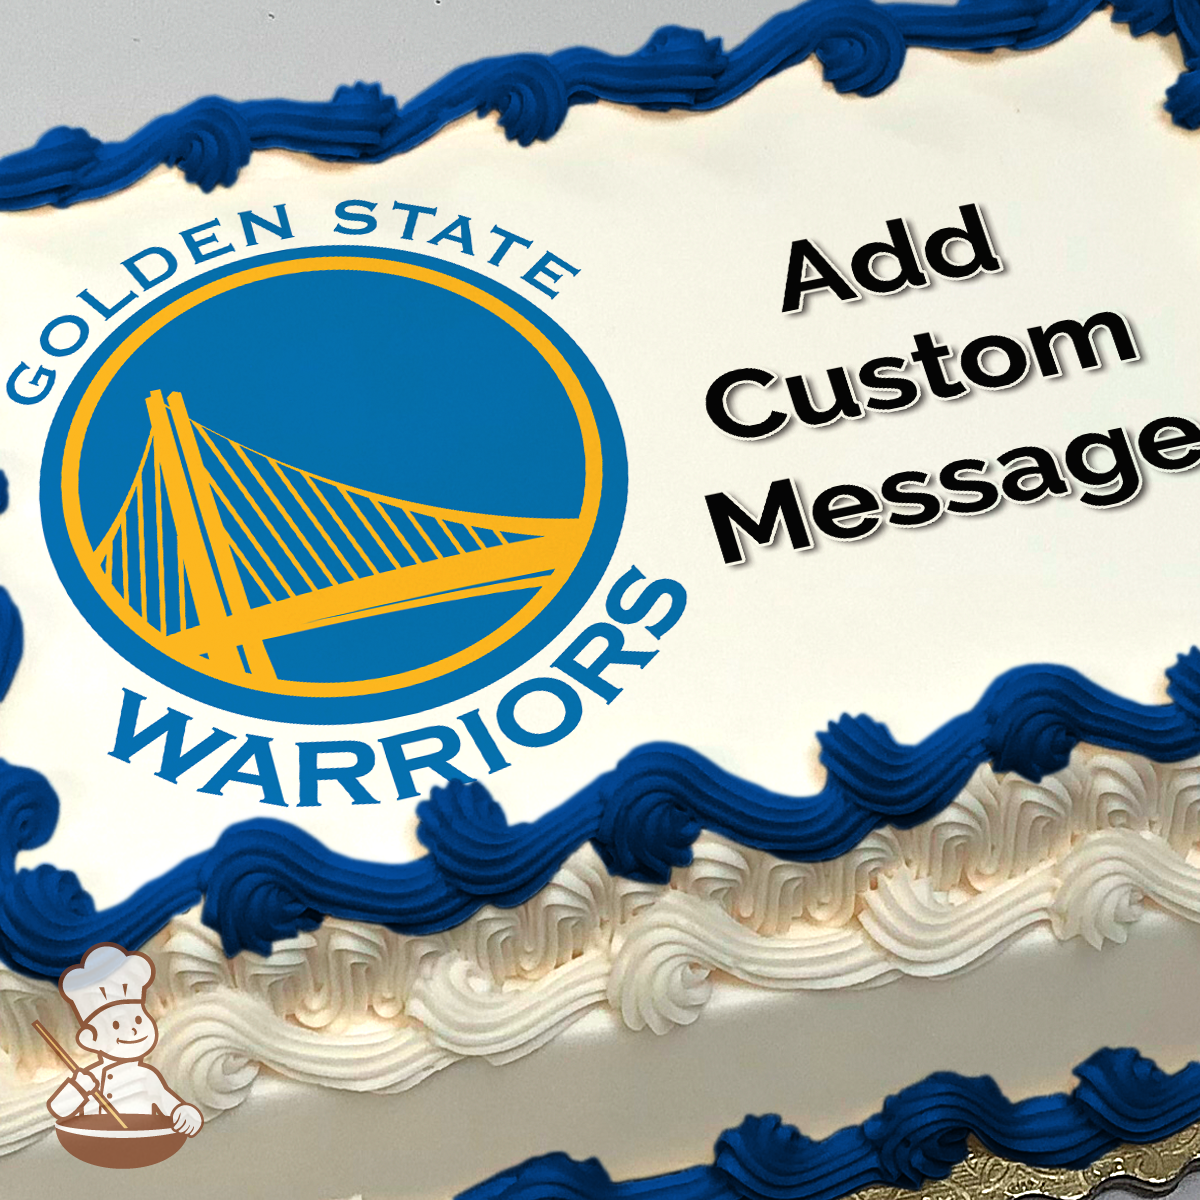 Golden State Warriors Basketball Jersey Cake - YouTube